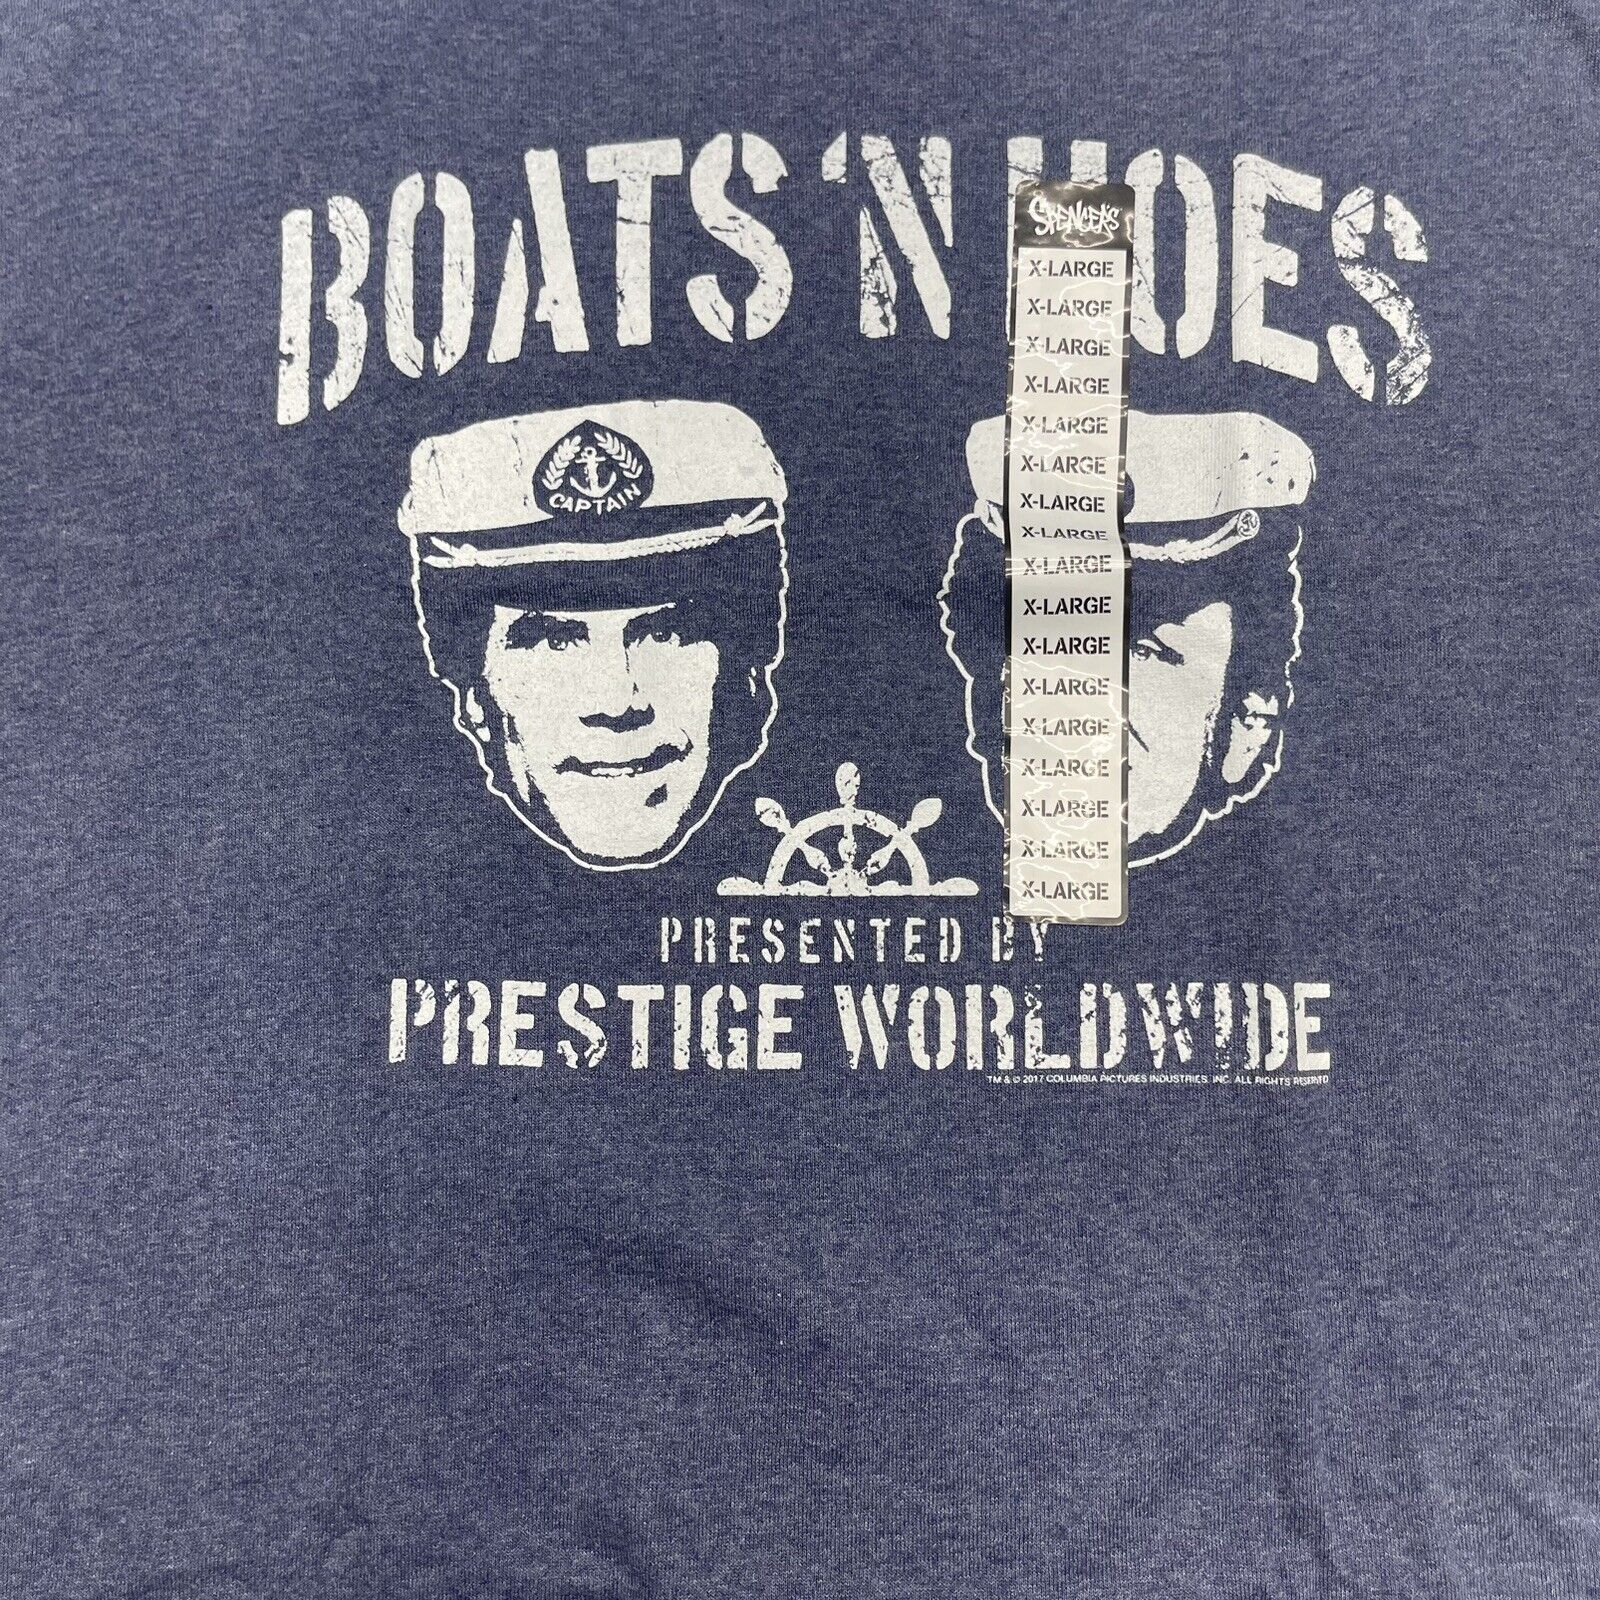 Prestige Worldwide T Shirt - Step Brothers - Spencer's